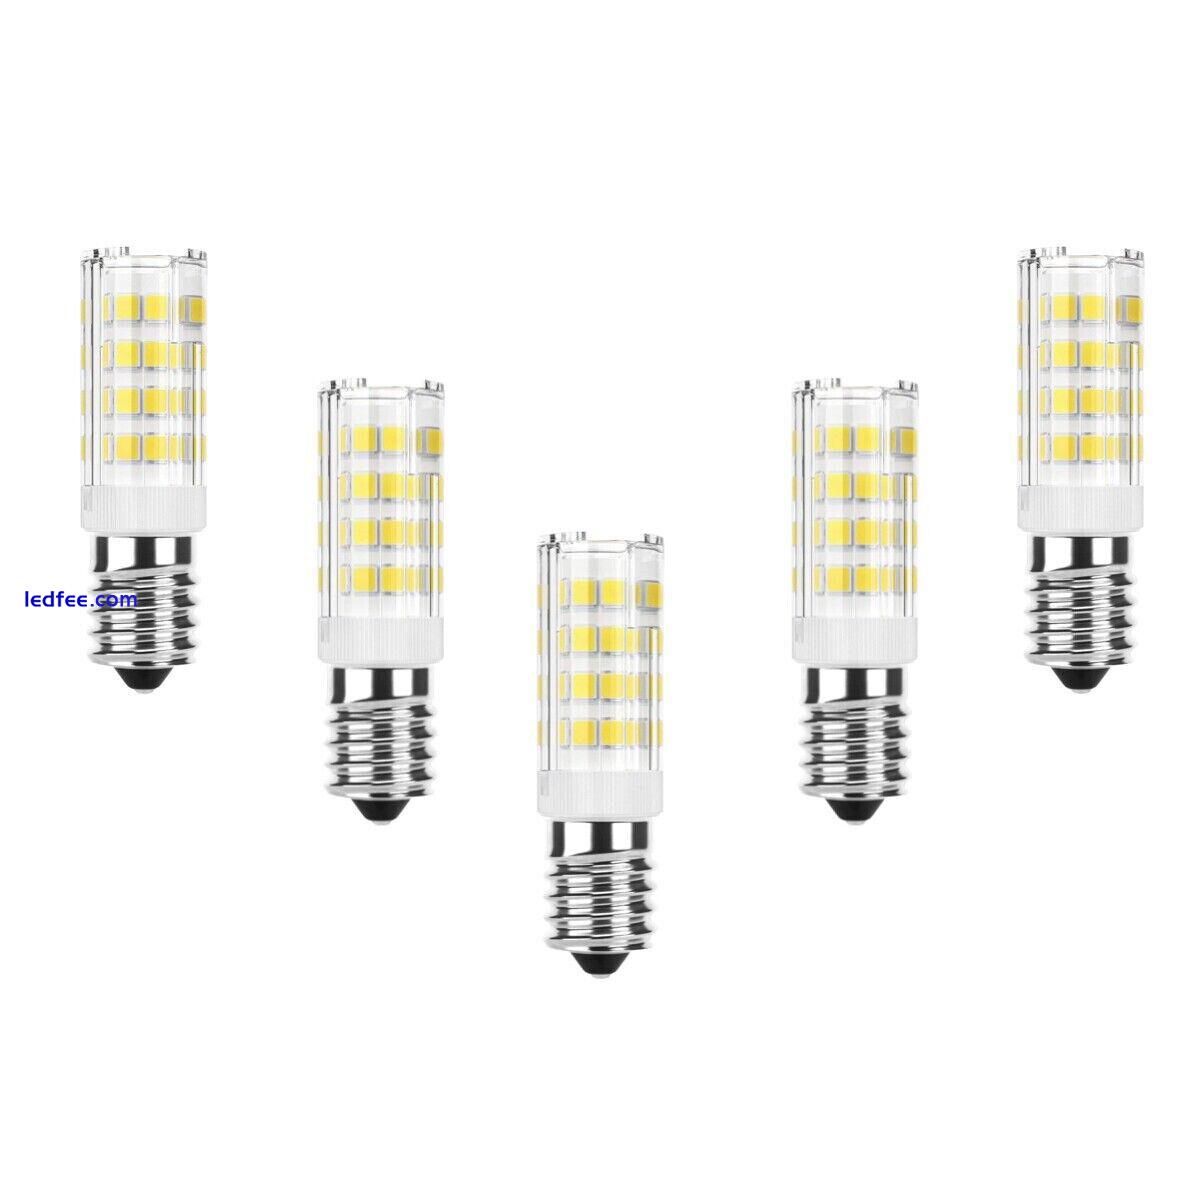 G4,G9,E14 LEDLight Bulb COOL, WARM WHITE Replacement For Halogen Capsule Bulbs 2 